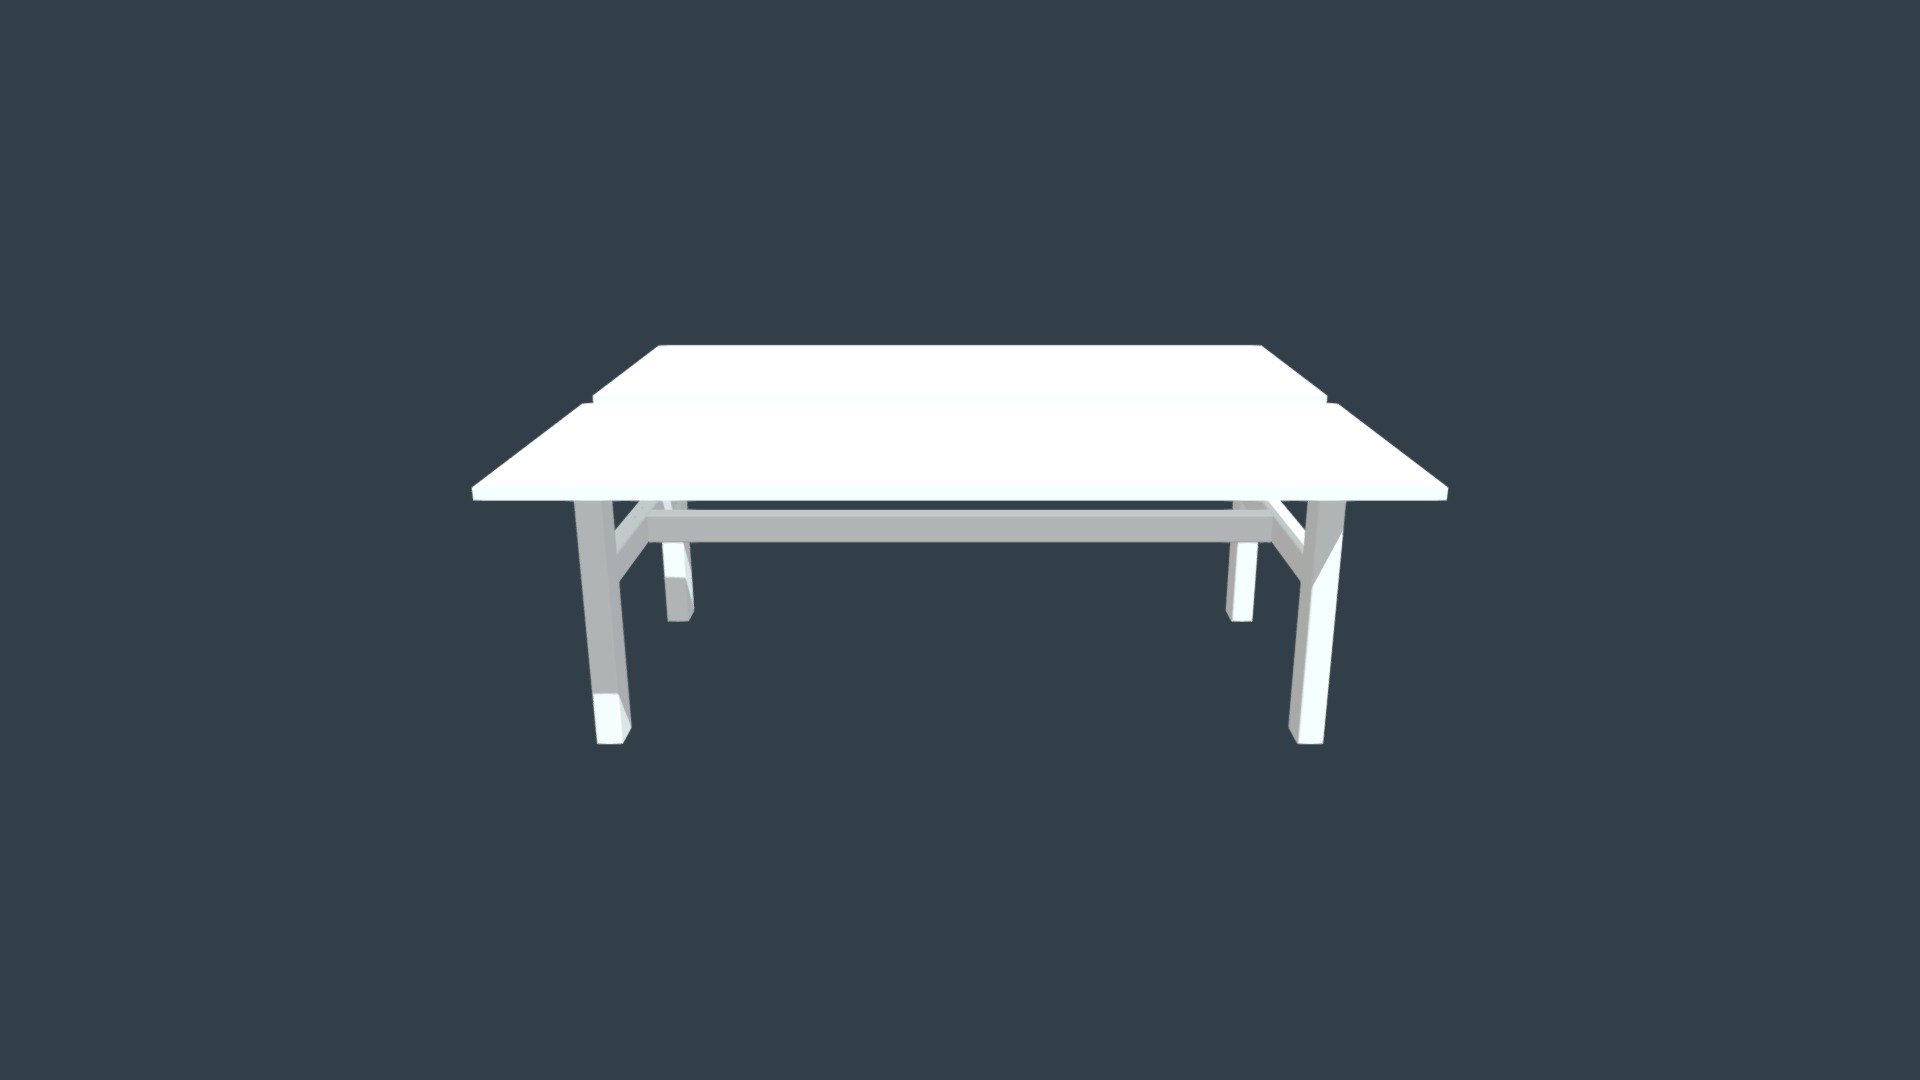 Agile Double Sided Desks – Fixed